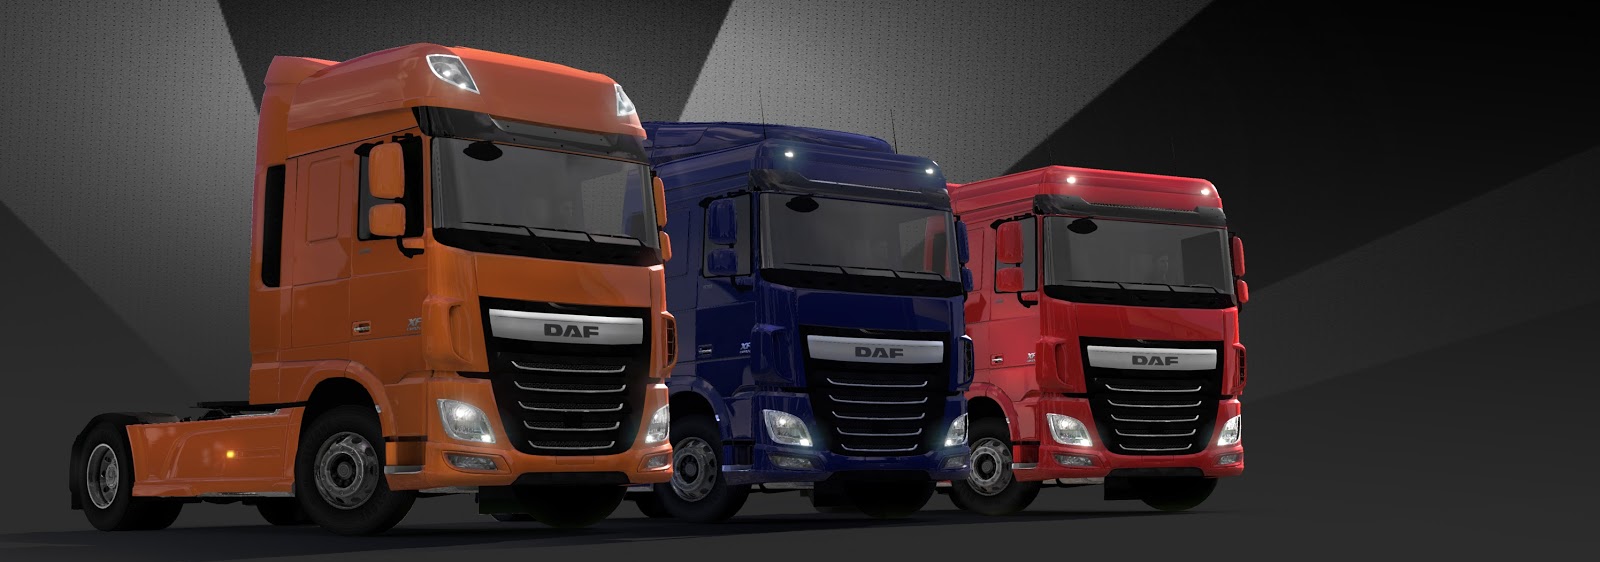 euro-truck-simulator-2-1-14-guncellemesi-daf-euro6